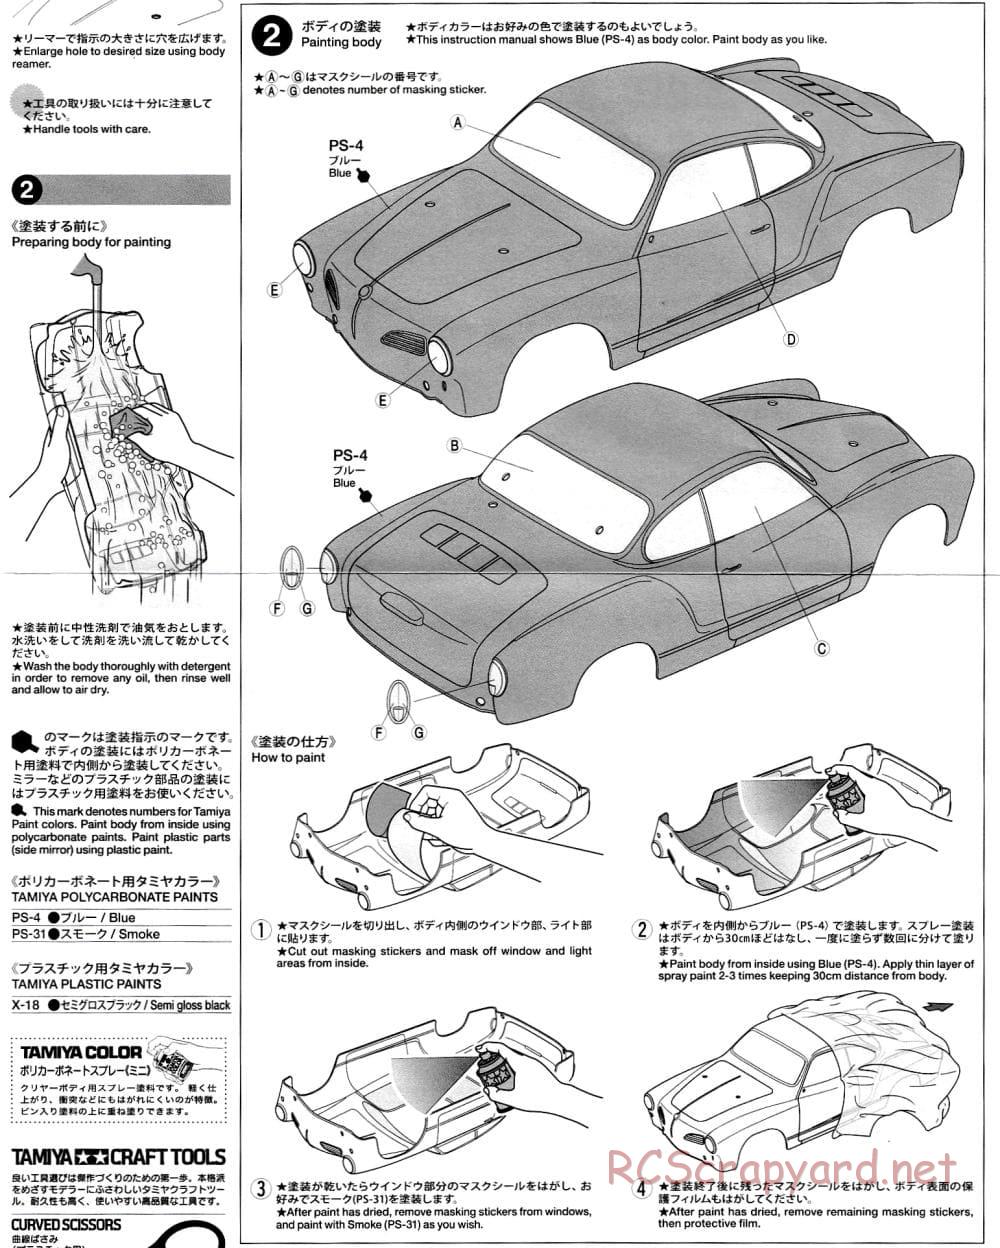 Tamiya - Volkswagen Karmann Ghia - M-06 Chassis - Body Manual - Page 2